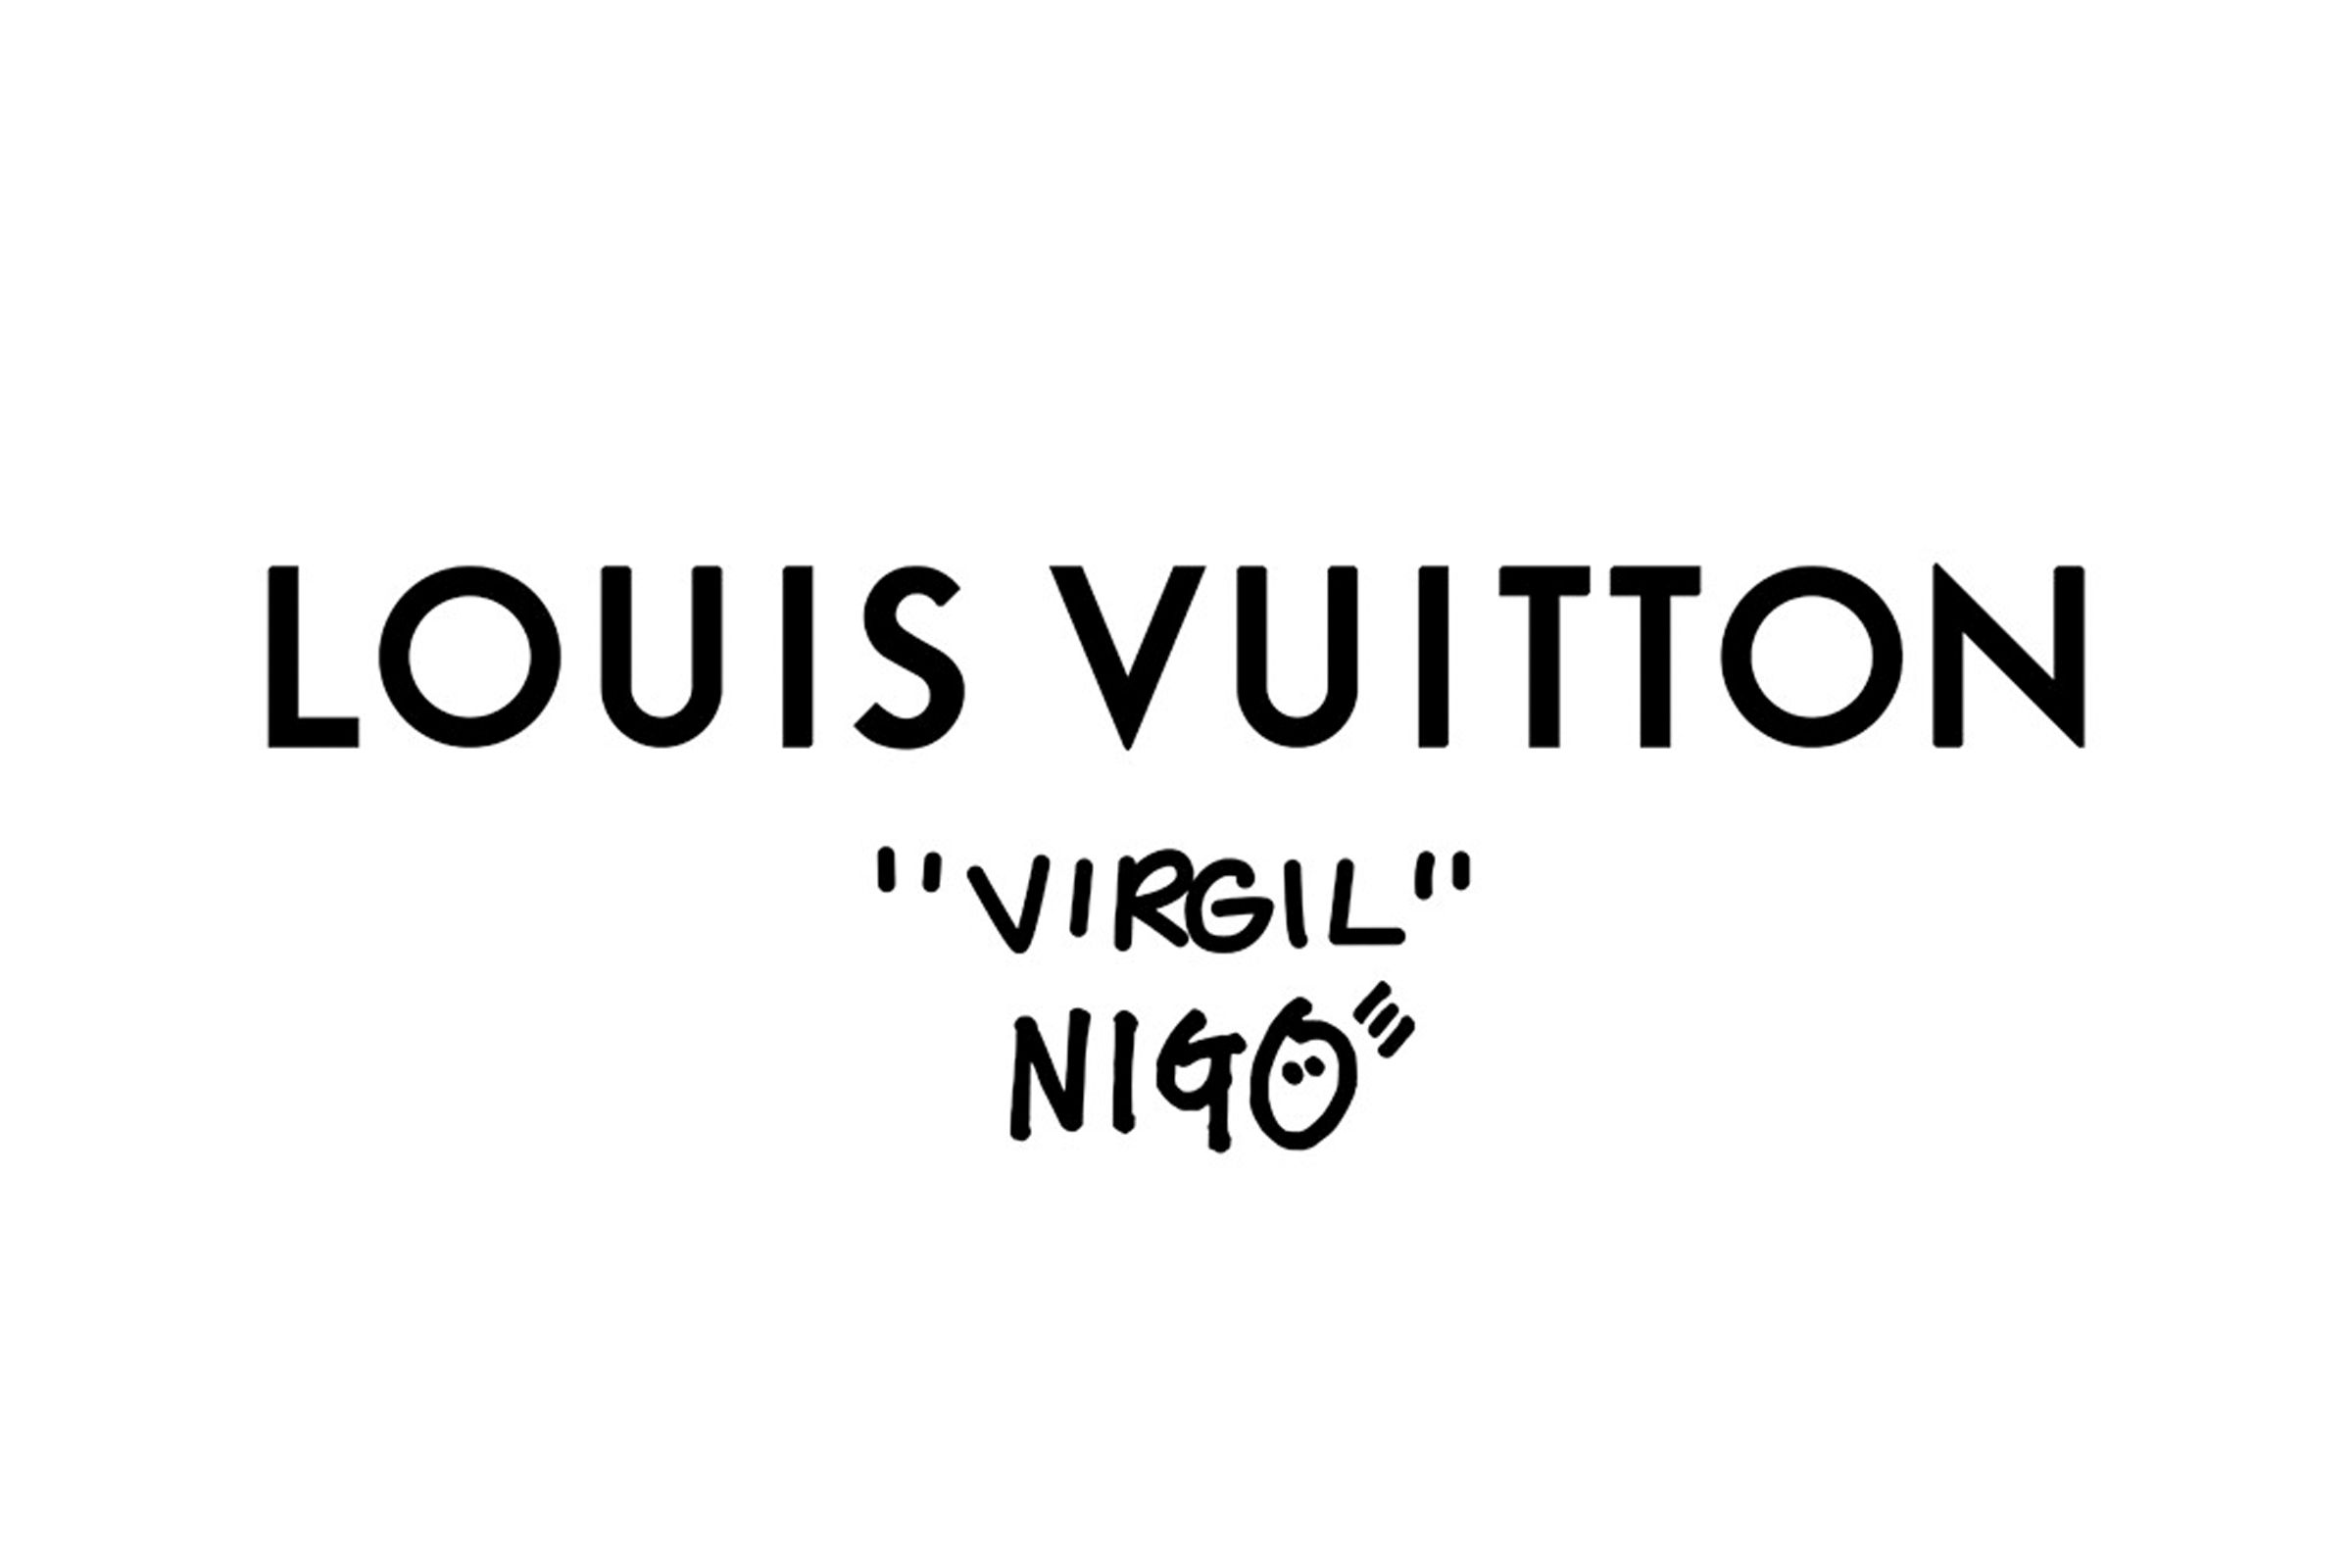 NTWRK - Louis Vuitton x Nigo Squared LV Crewneck Sweatshirt Grey